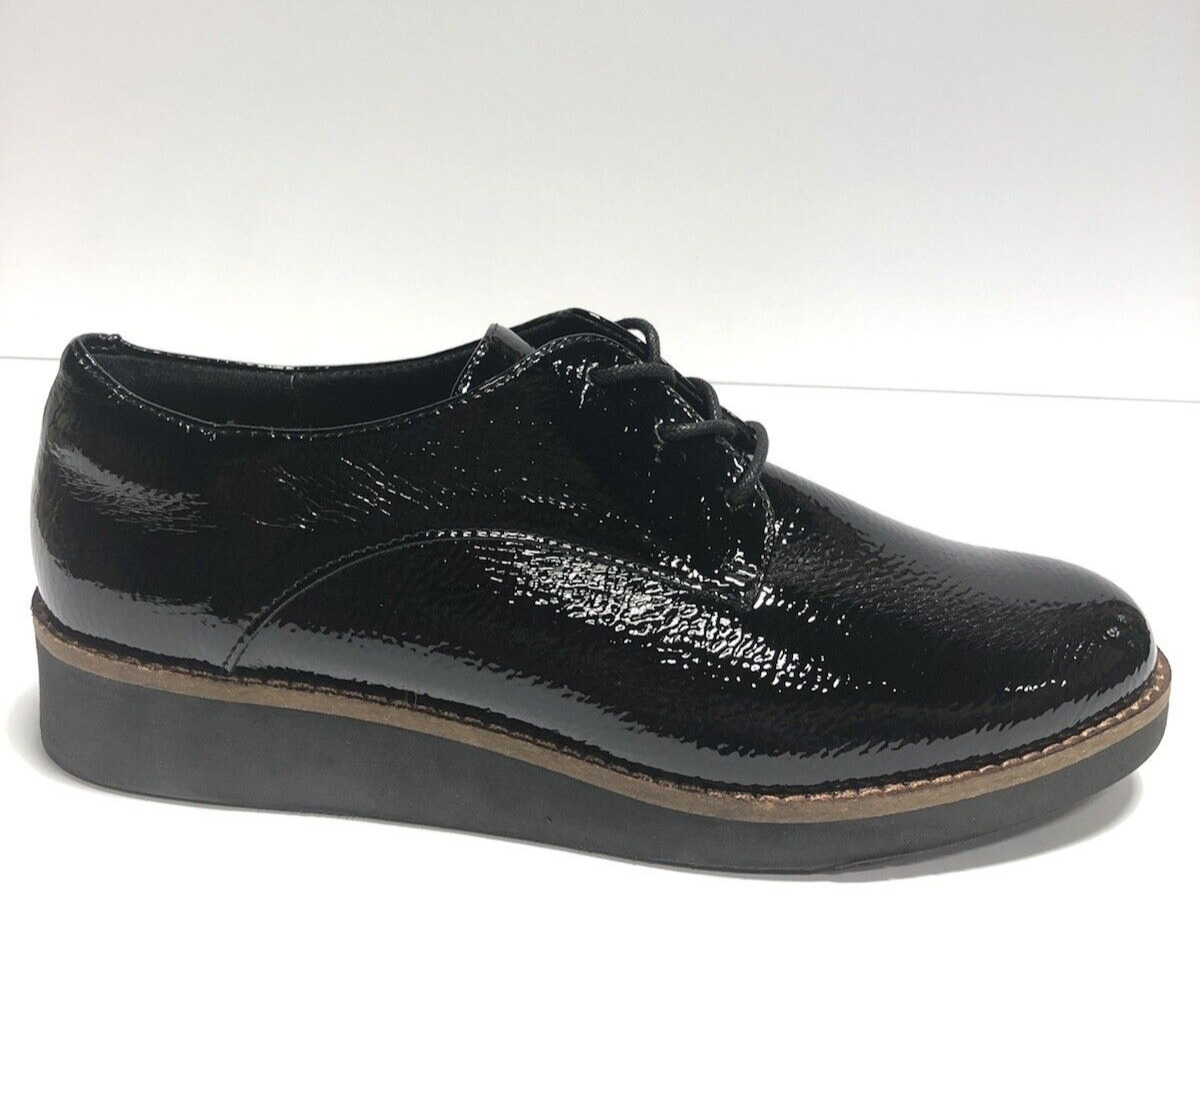 Softwalk Women’s Willis Black Oxford Shoe Size 7 M - image 1